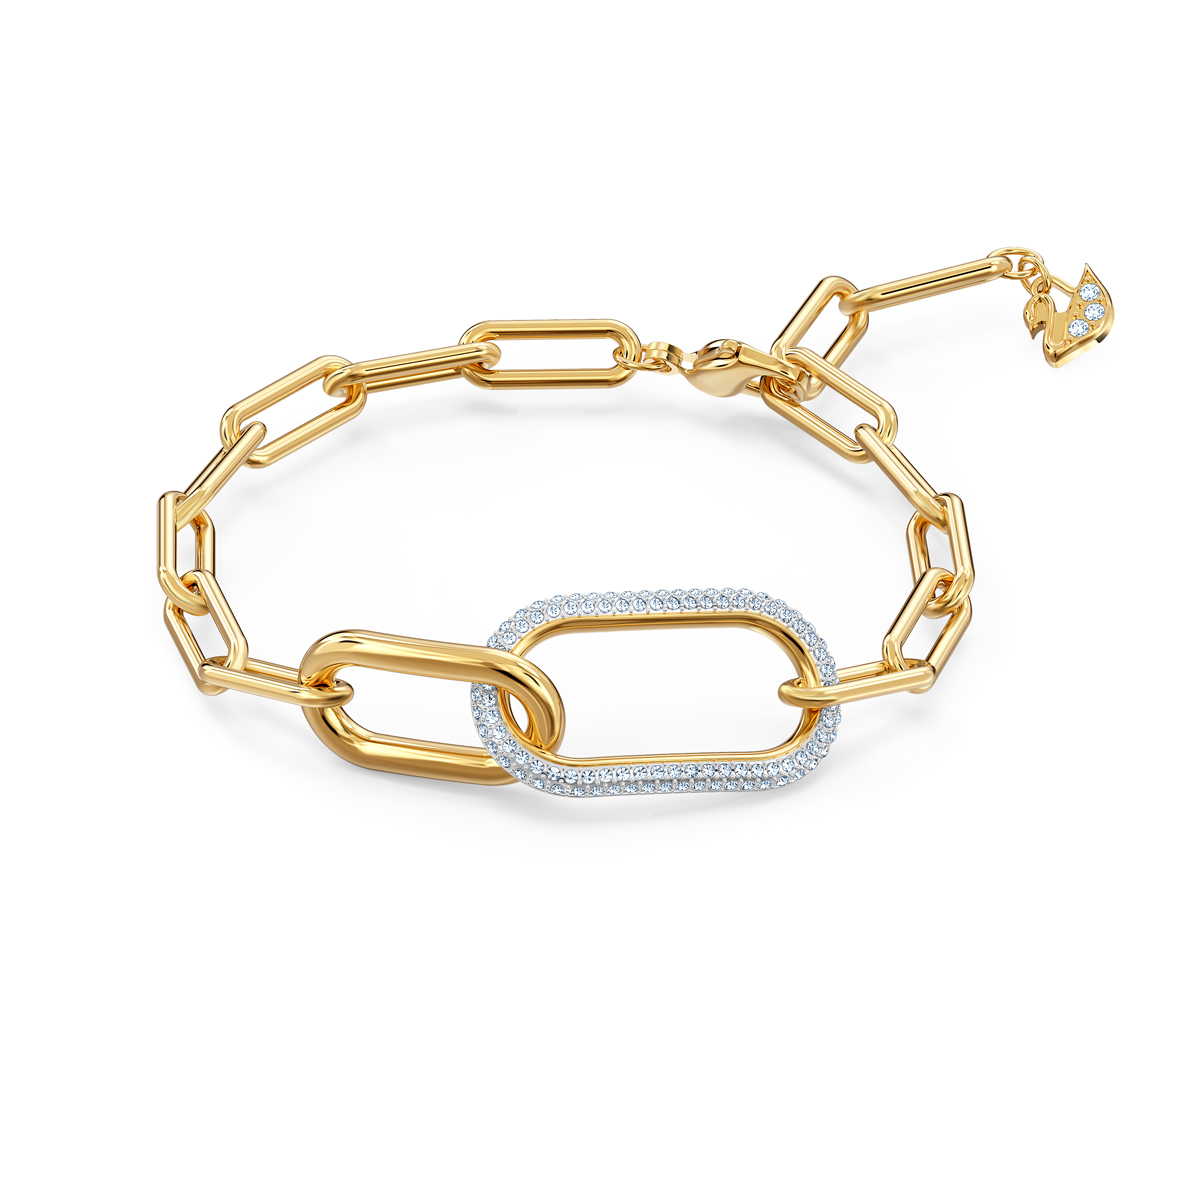 Swarovski Crystal and Gold Time Bracelet